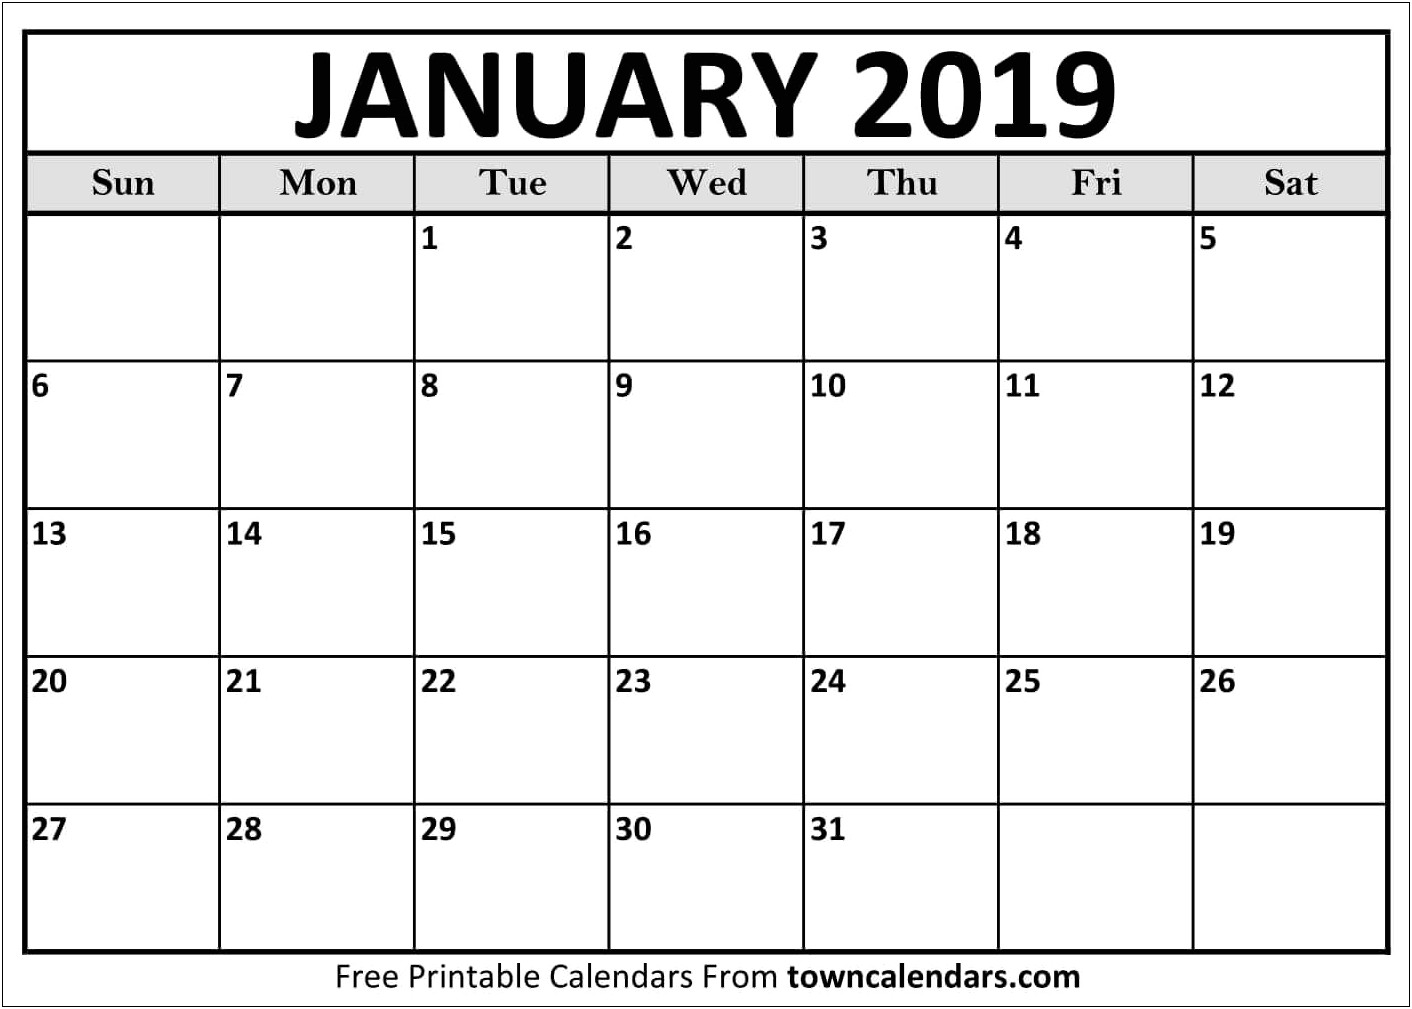 Free Printable Calendar Template January 2019